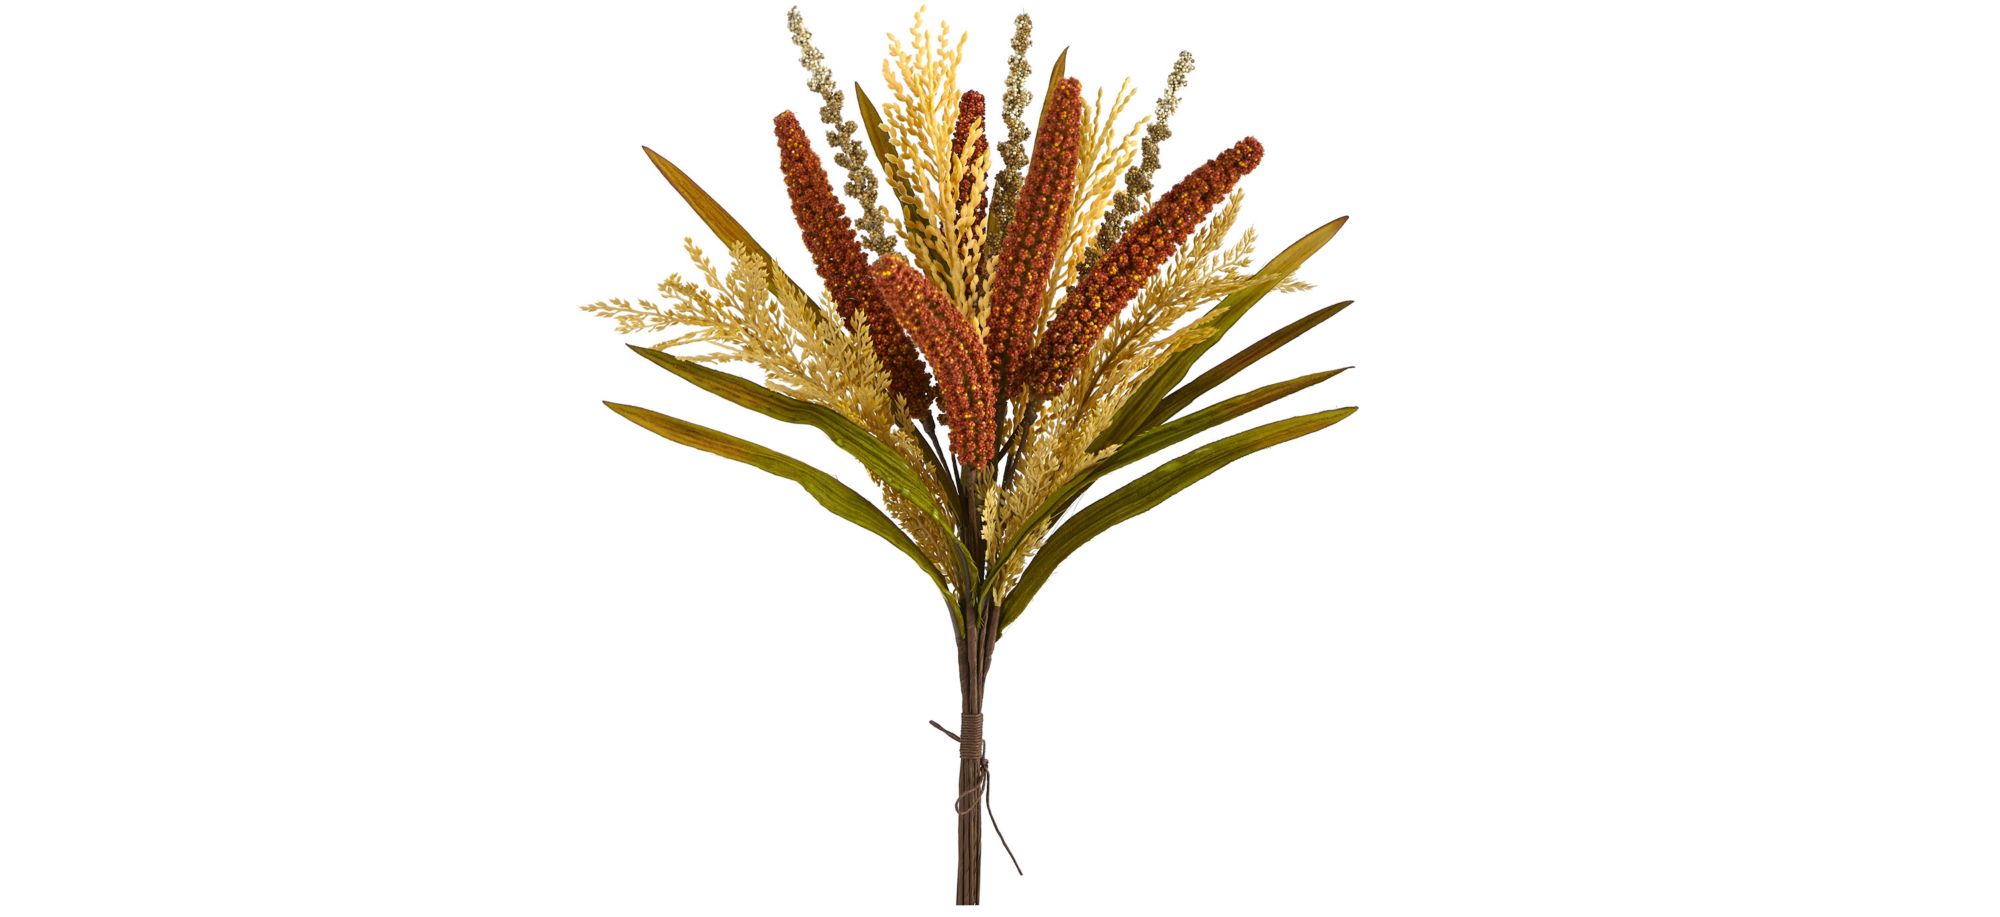 23in. Sorghum Harvest Artificial Bush Flower (Set of 3) in Orange by Bellanest